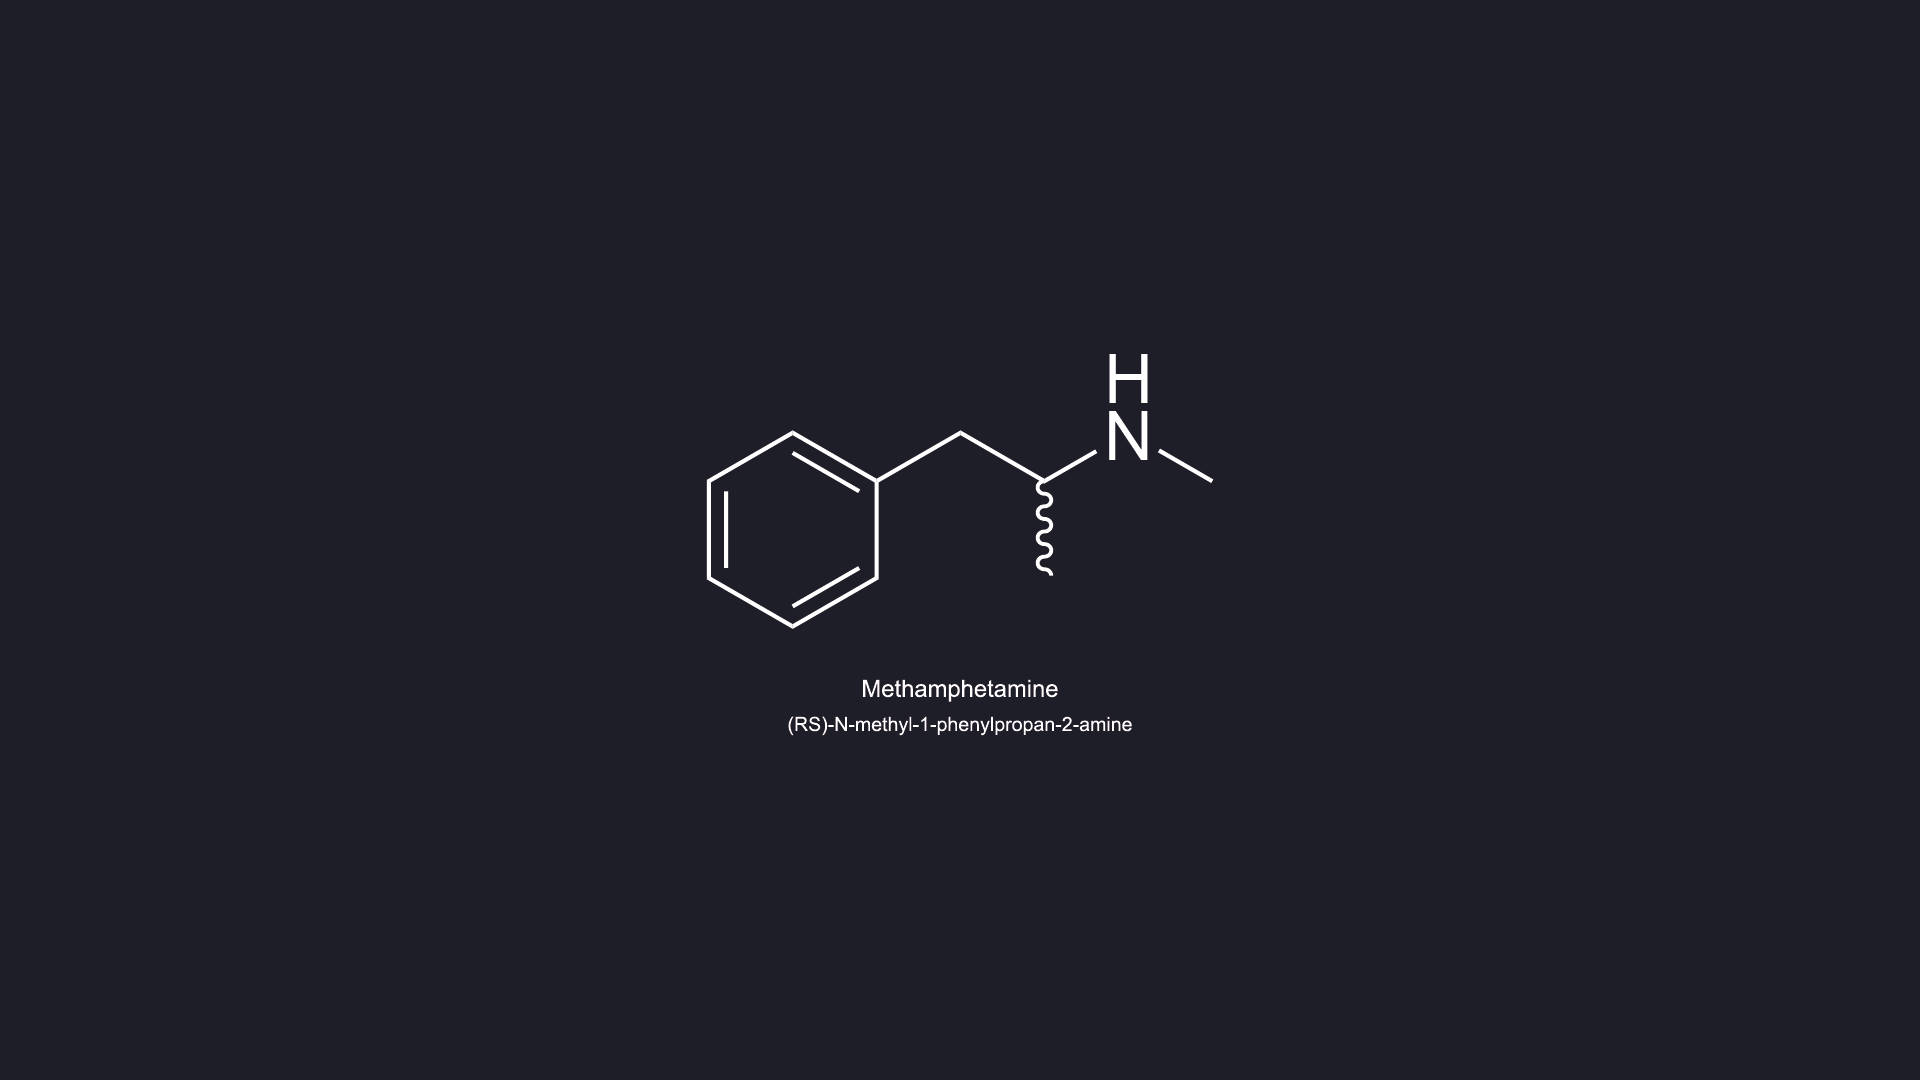 Caption: The Intricate Chemical Formula Of Methamphetamine. Background